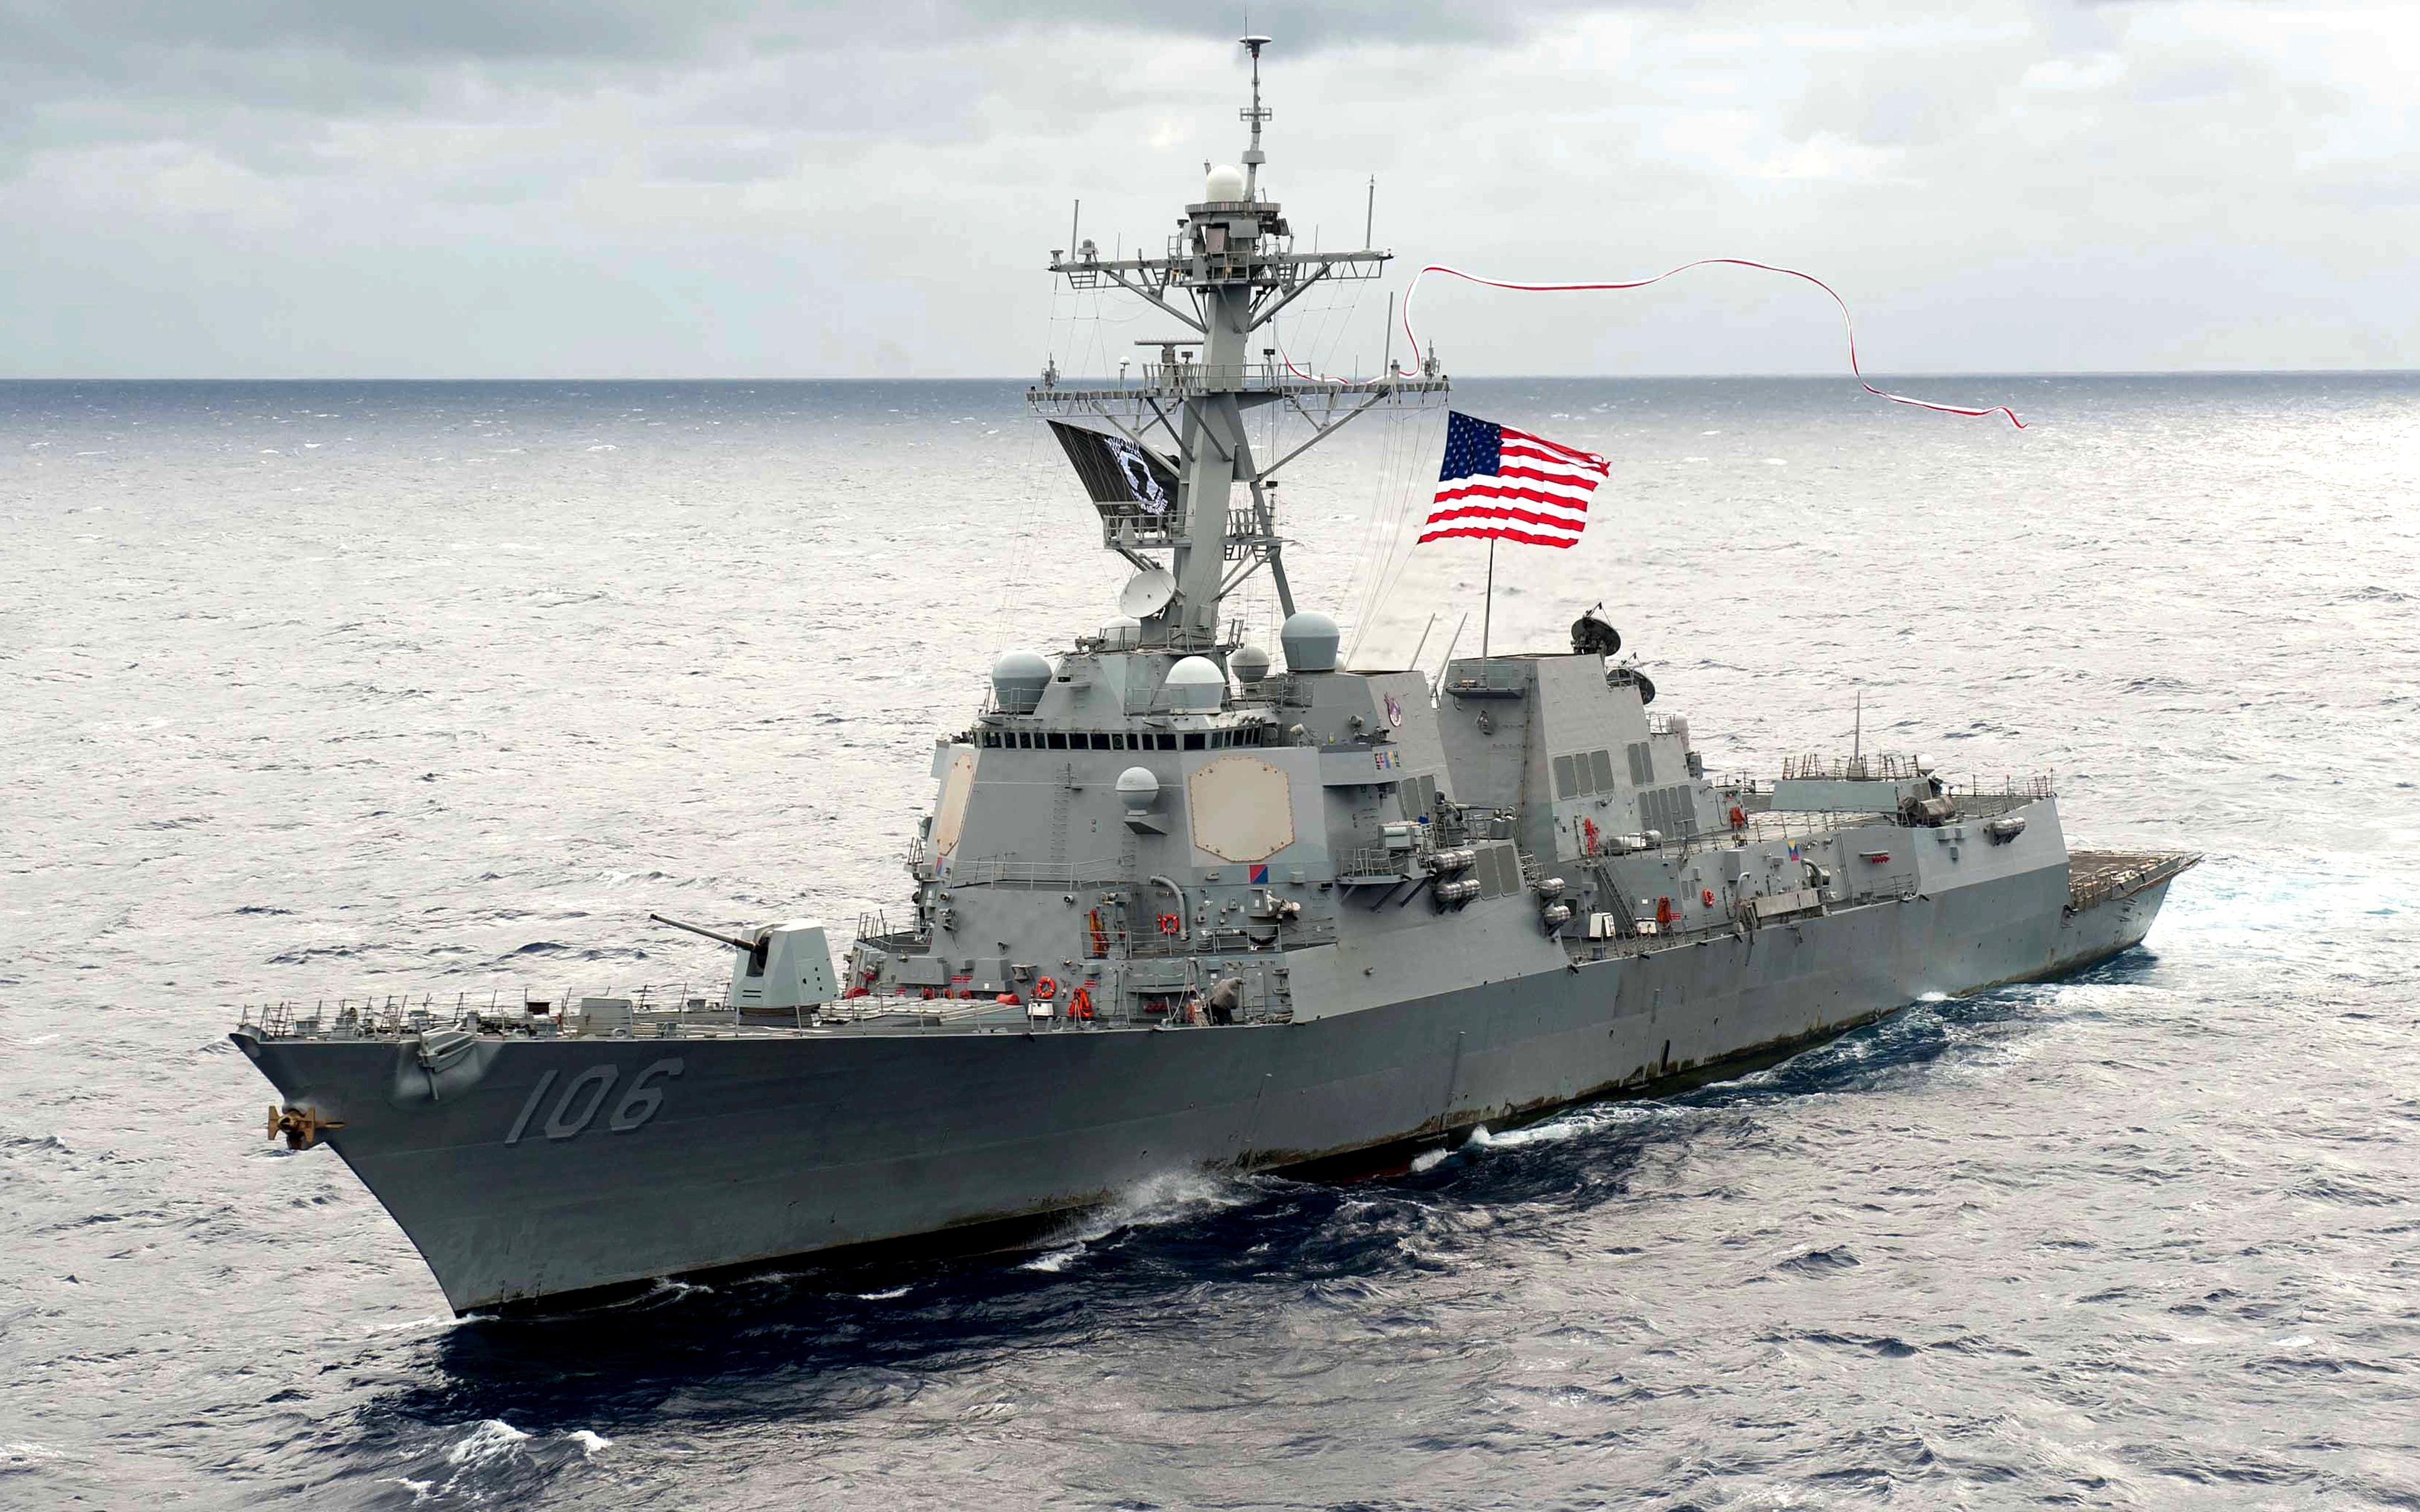 Download wallpaper USS Stockdale, 4k, sea, DDG- US Navy